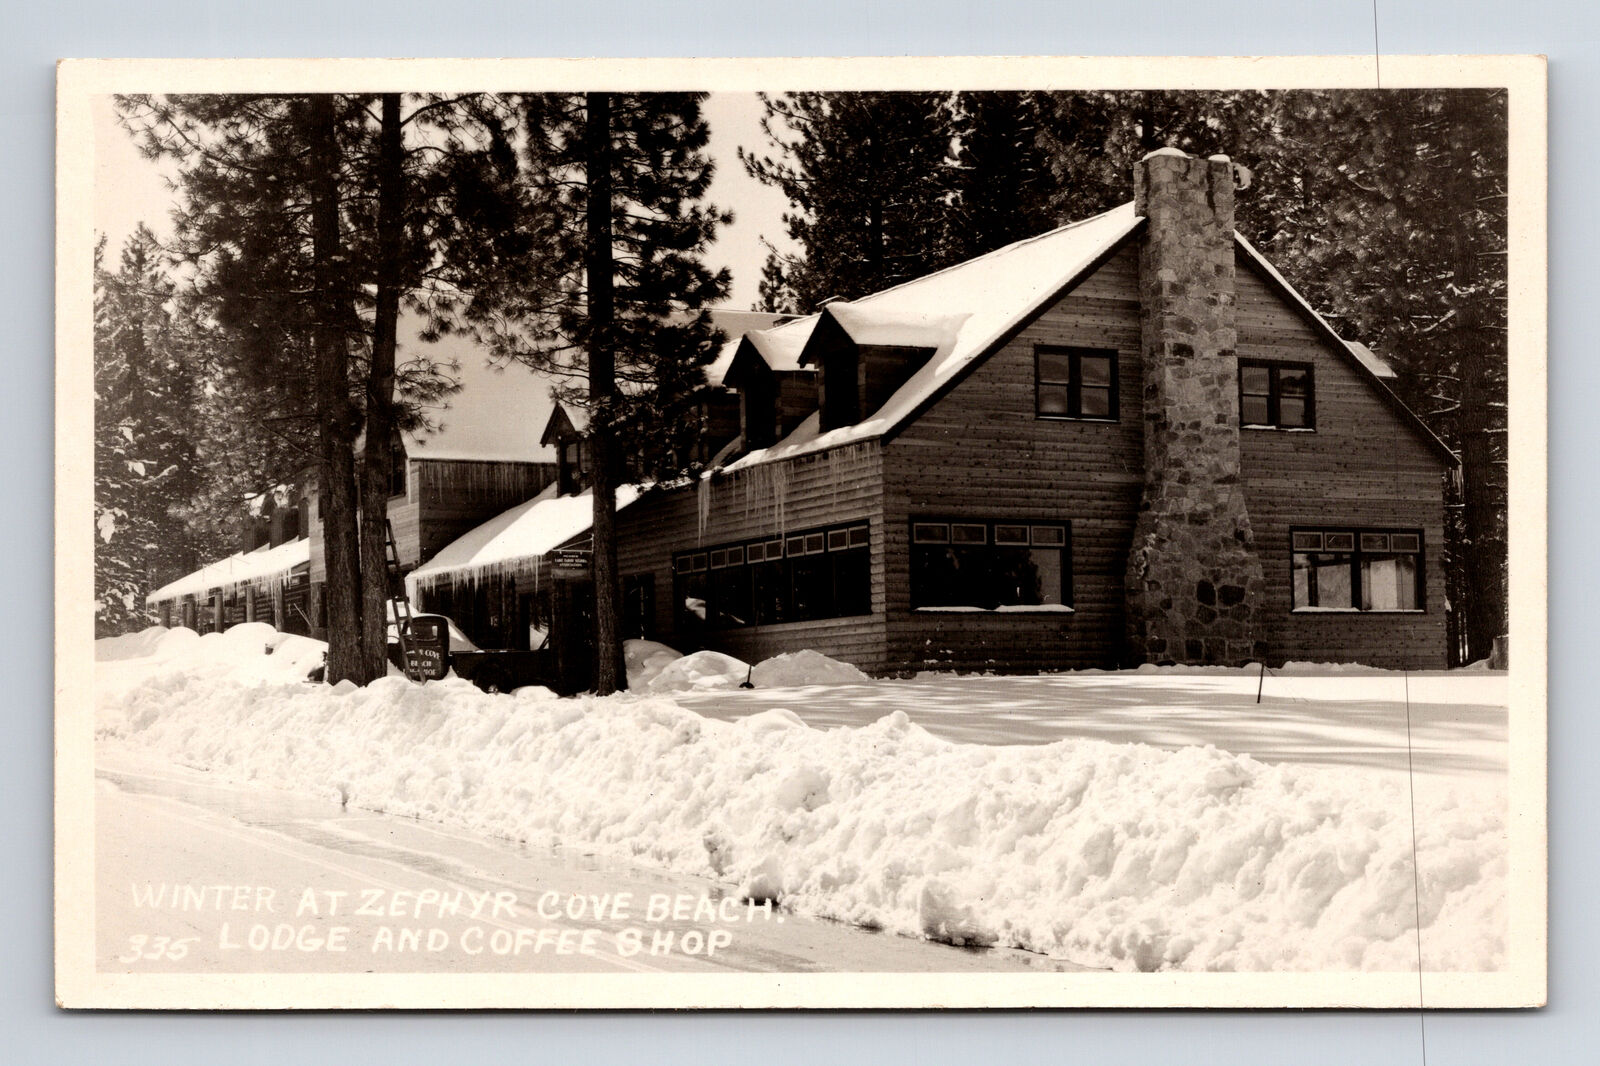 RPPC Winter at Zephyr Cove Beach Lodge Coffee Shop Truck Lake Tahoe NV Postcard